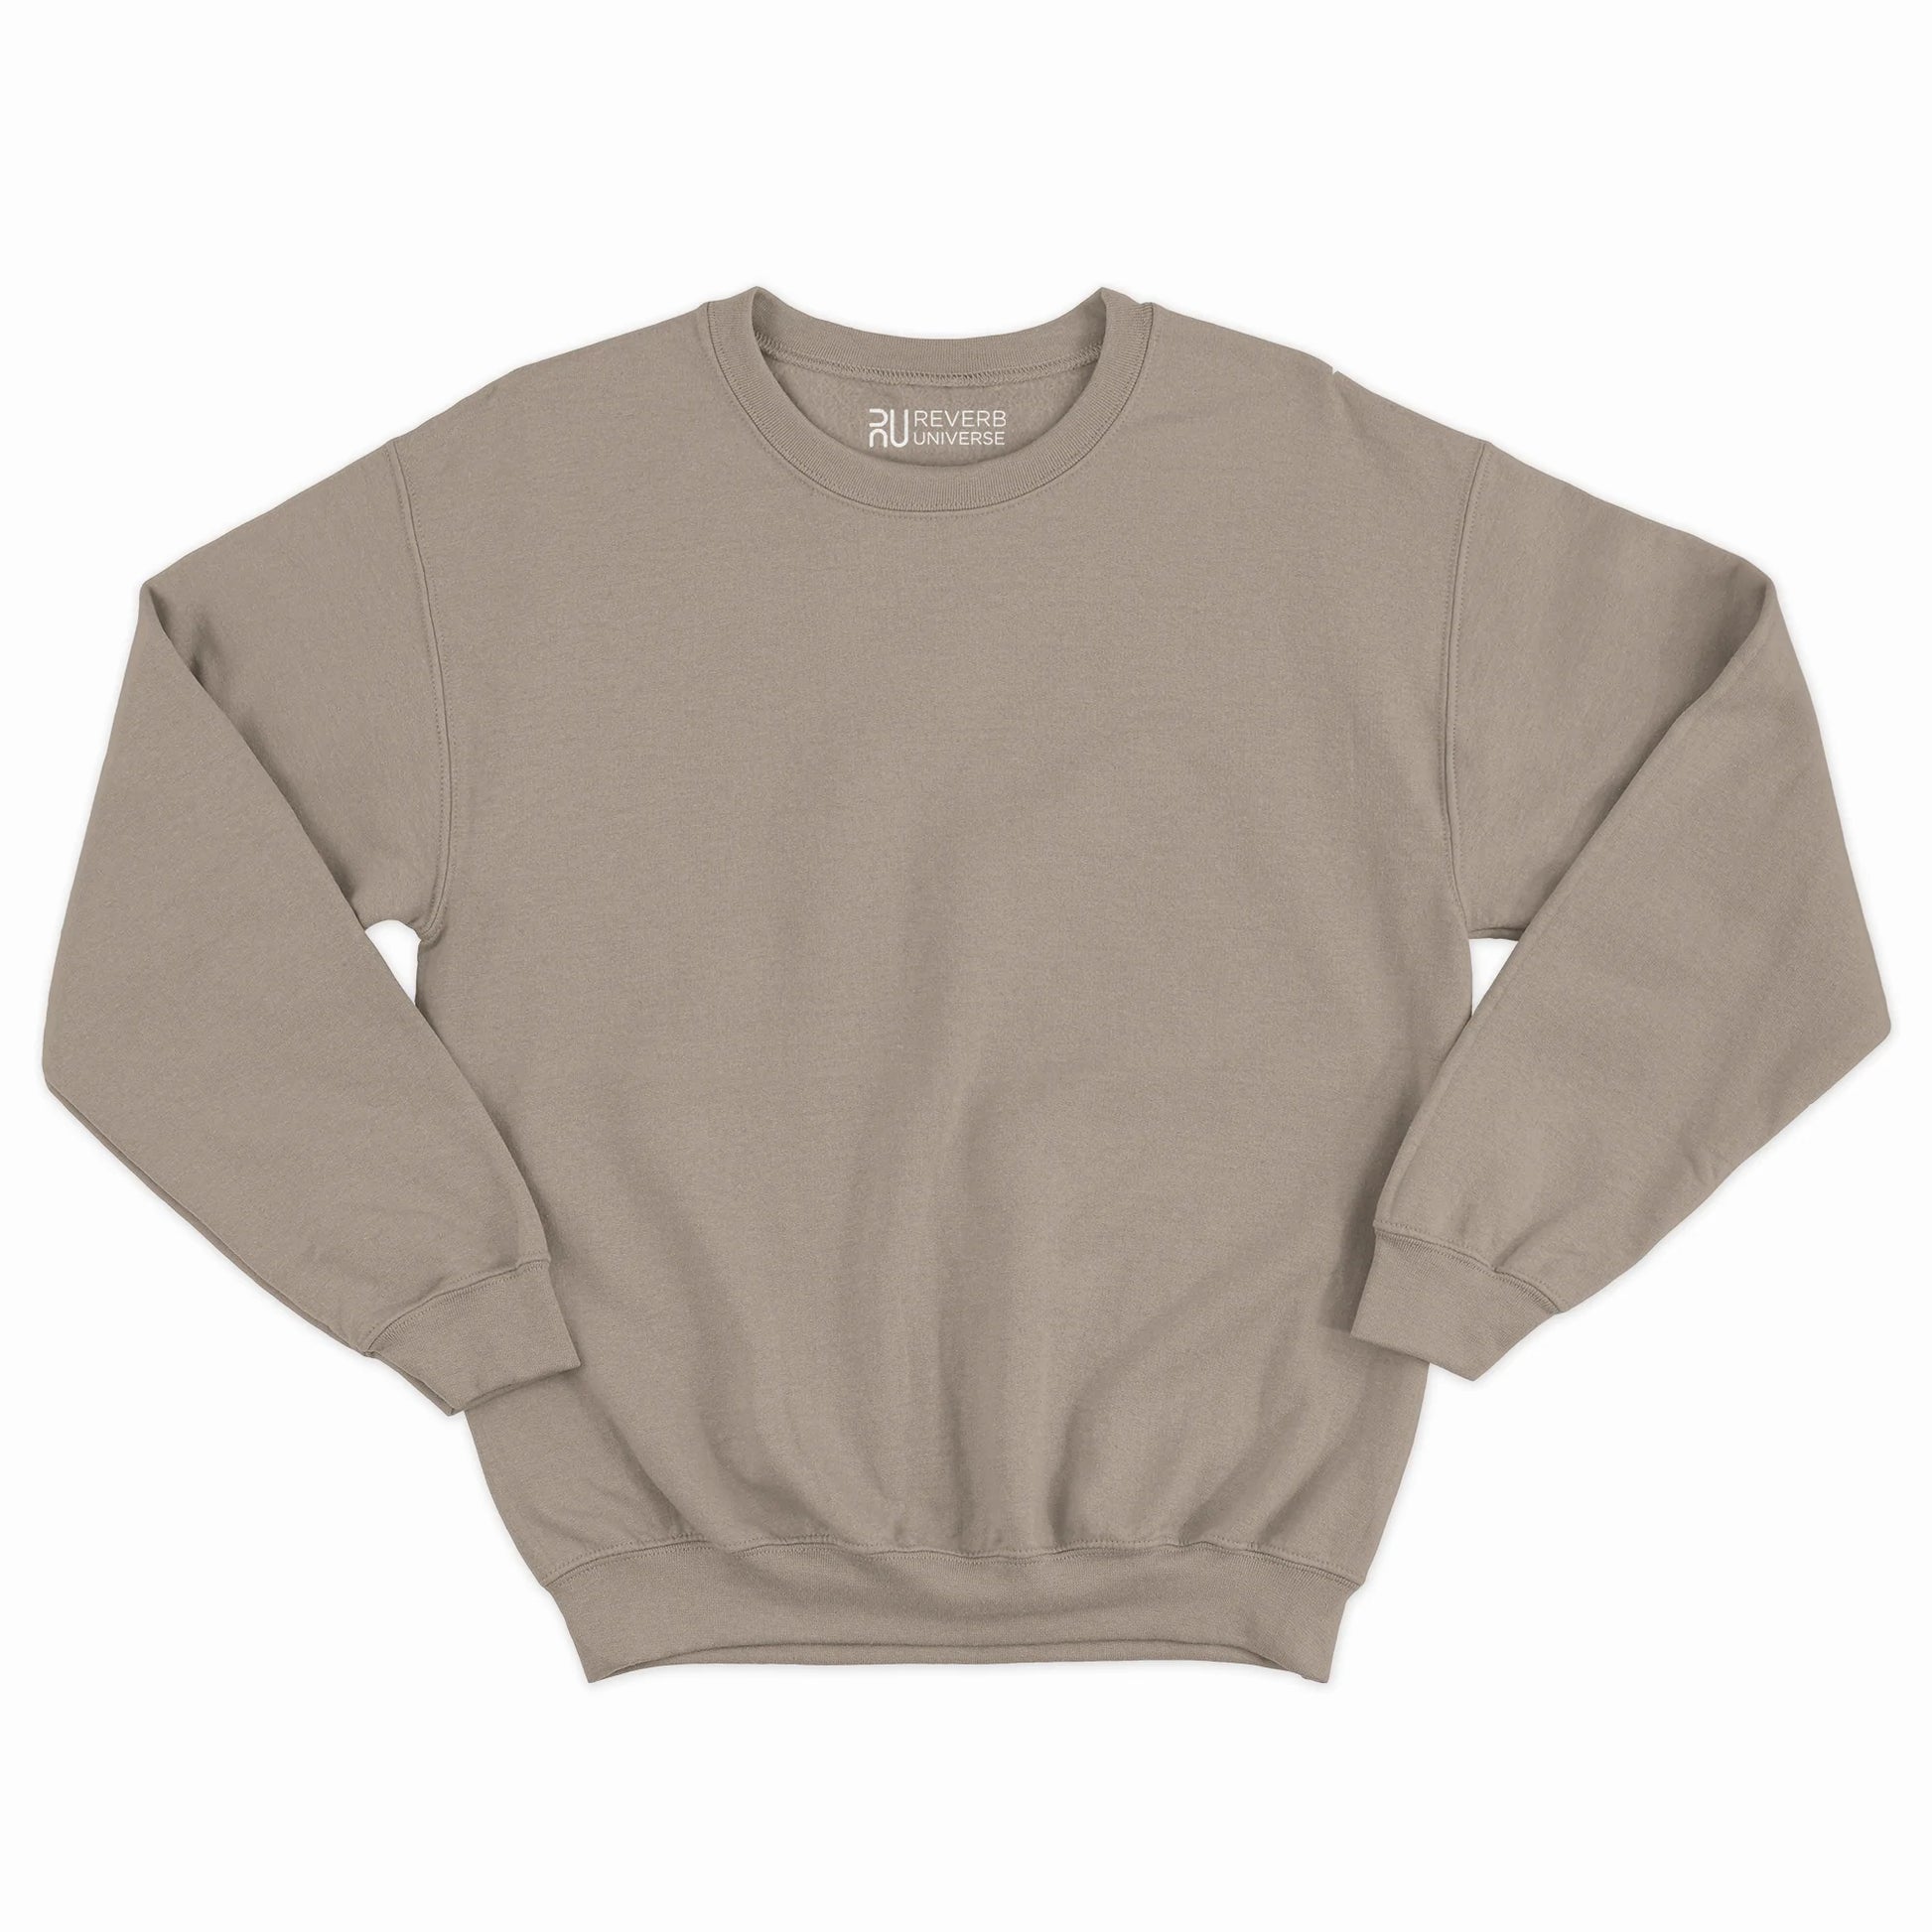 Men's Basic Coffee Sweatshirt